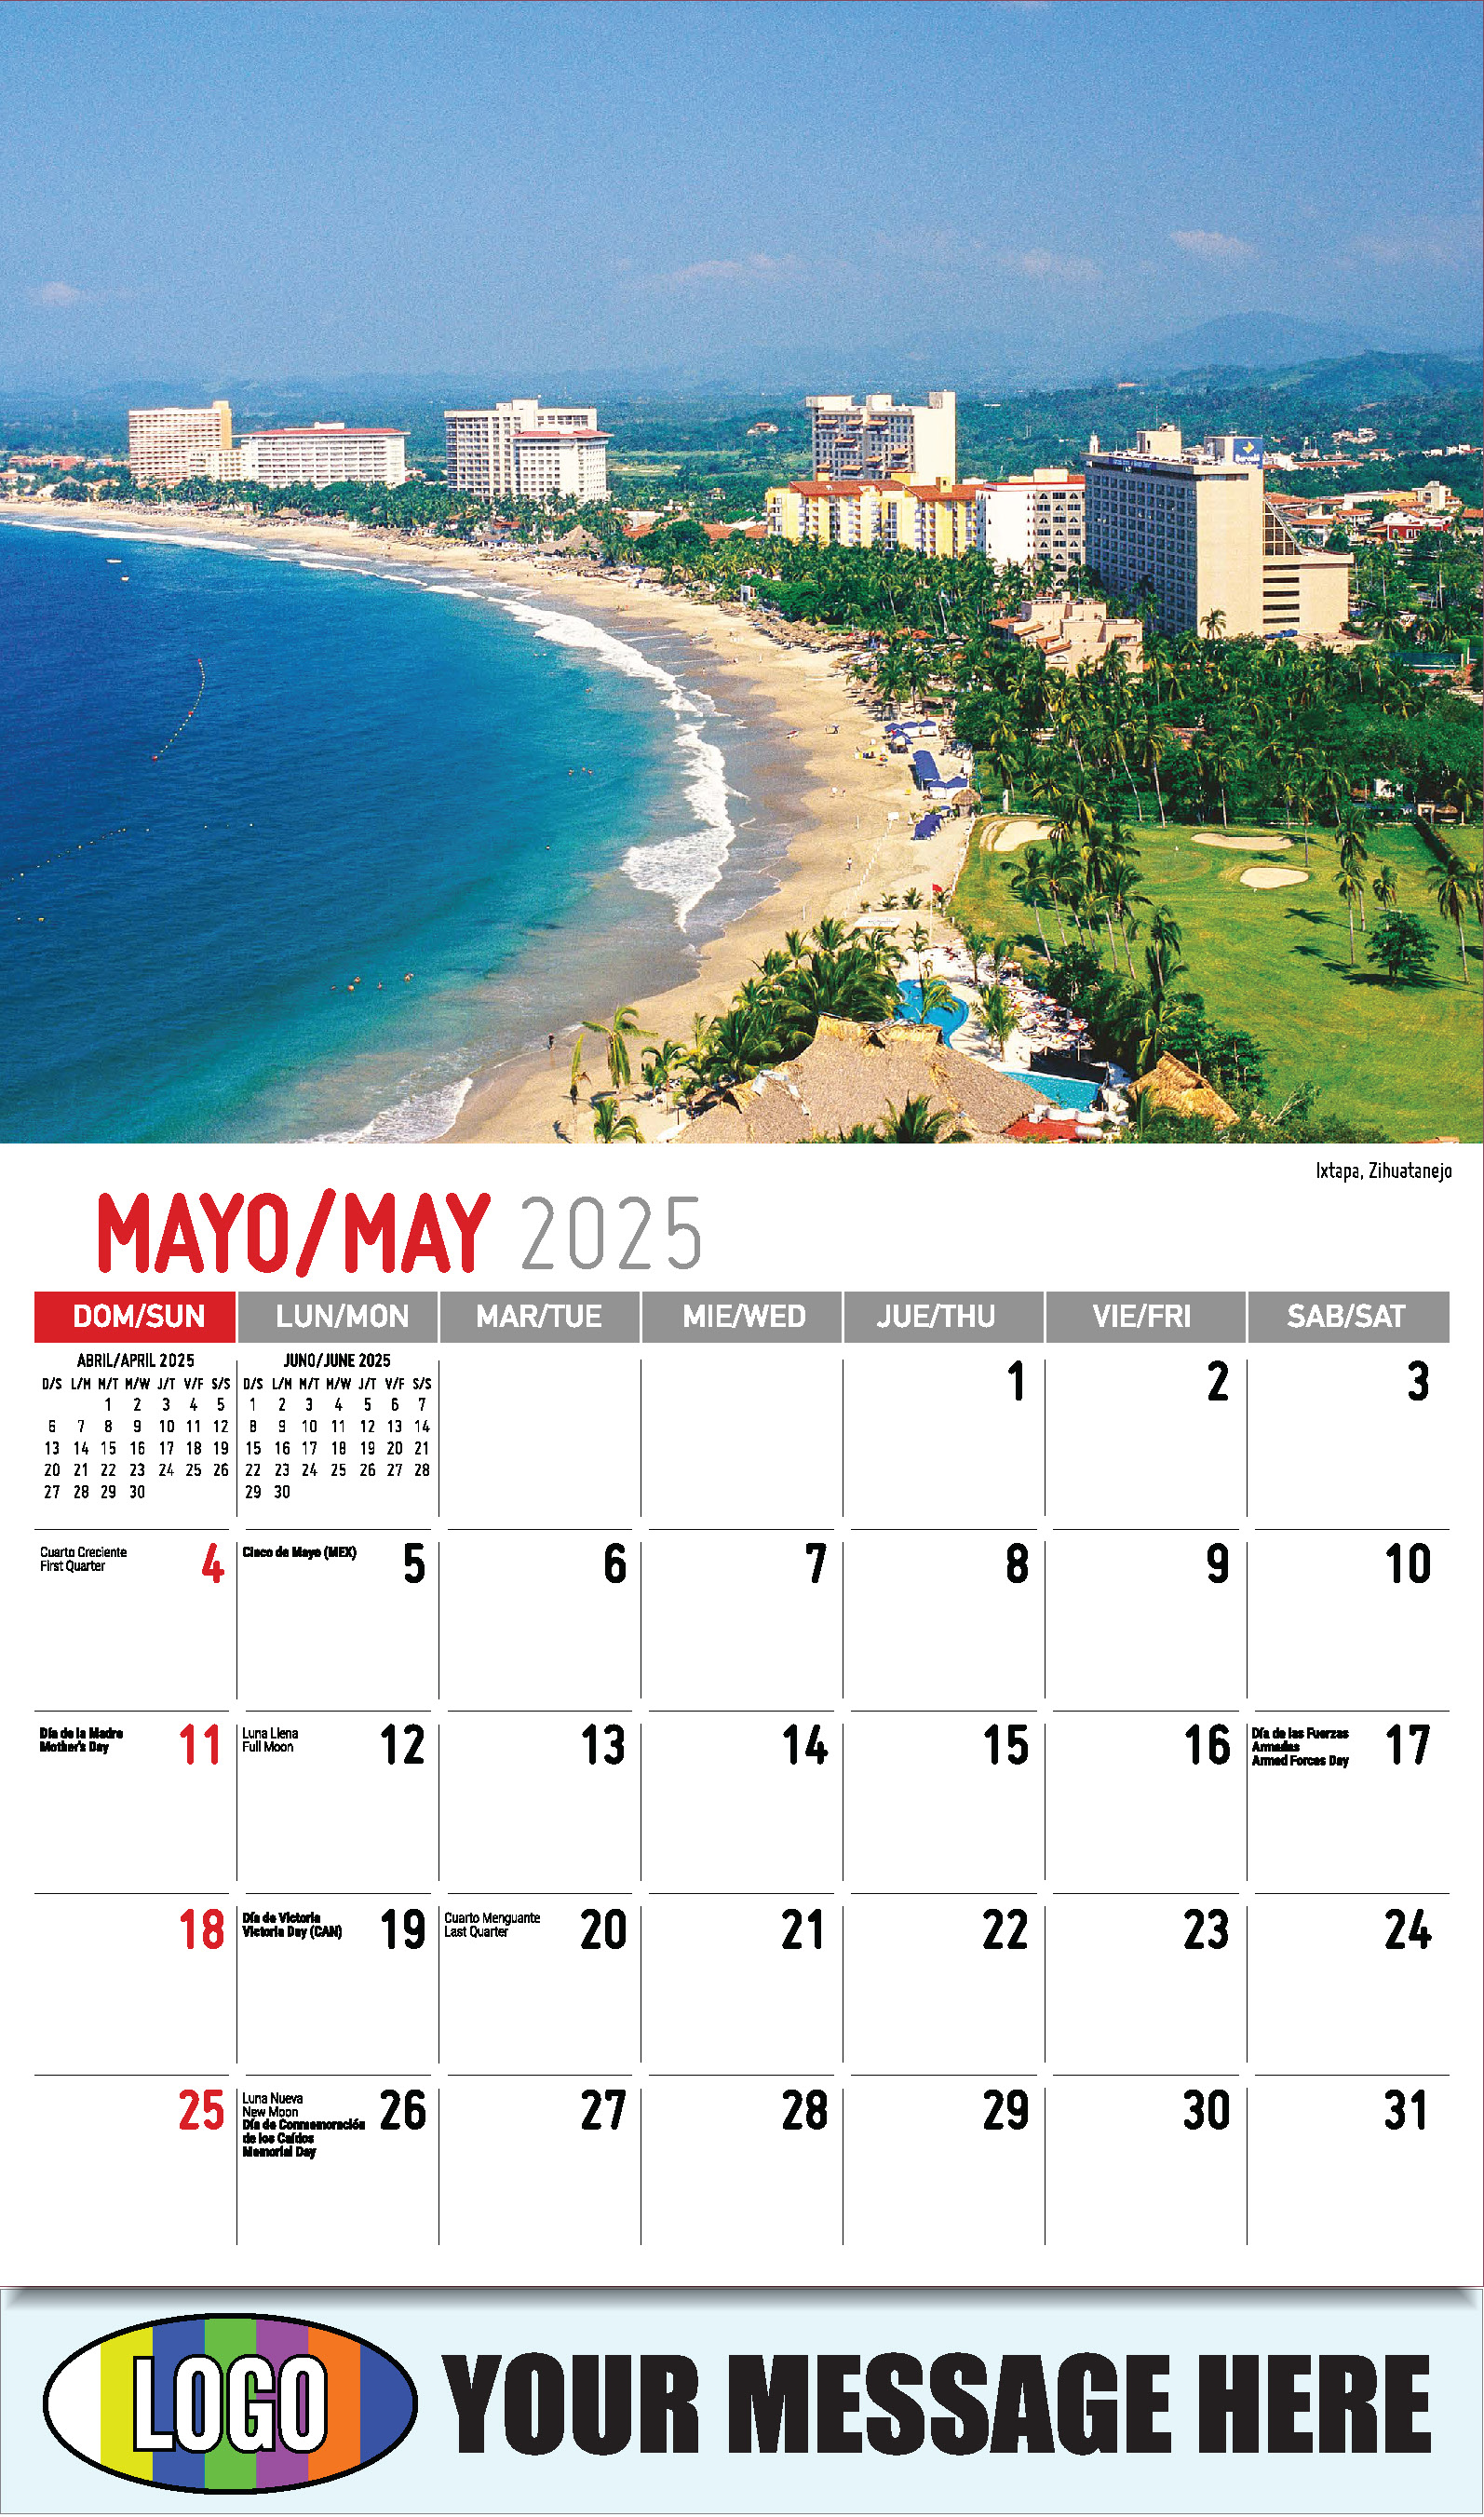 Scenes of Mexico 2025 Bilingual Business Promo Calendar - May